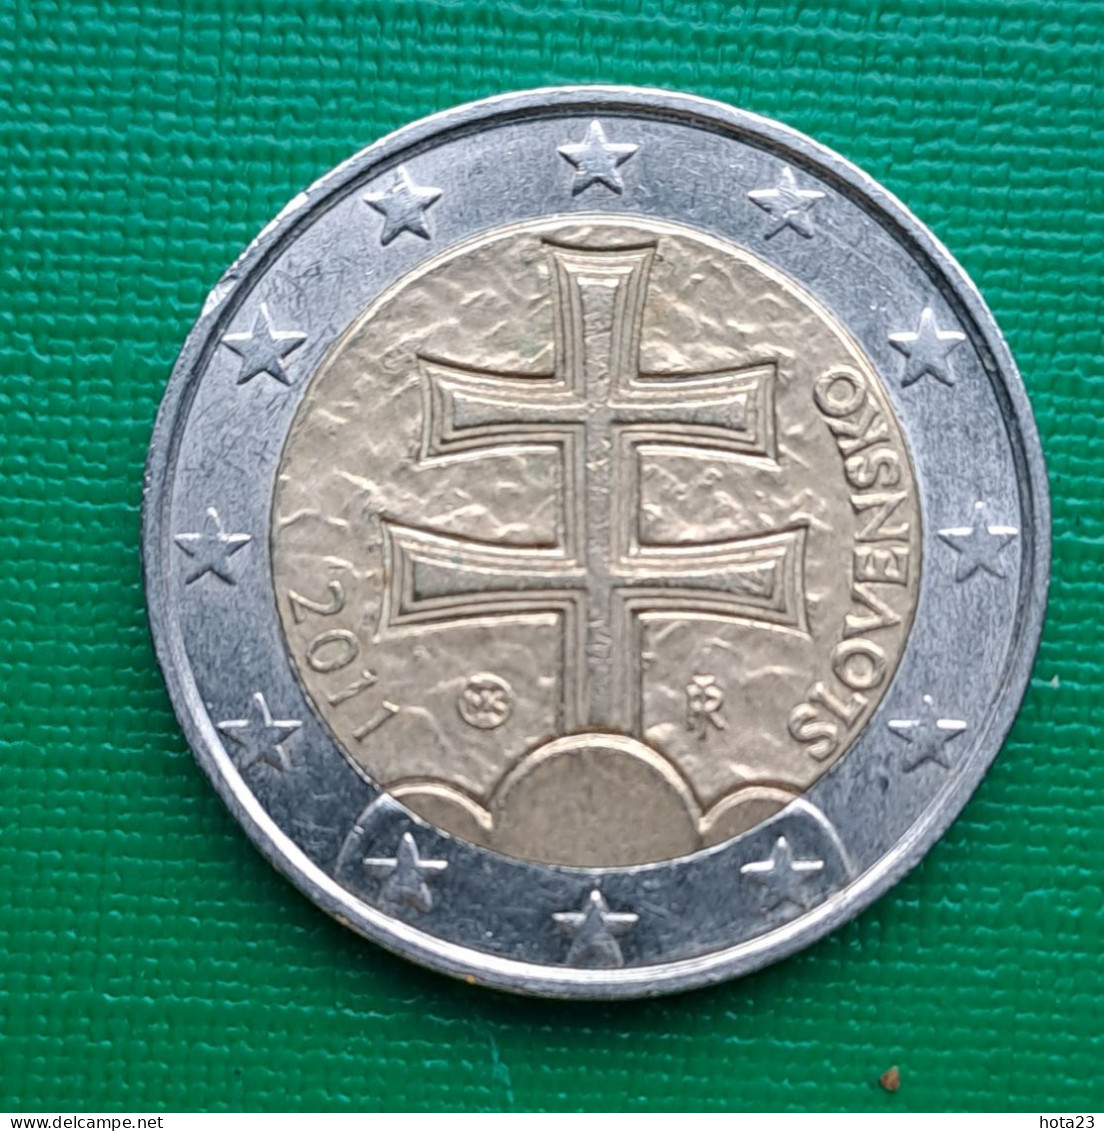 SLOVAKIA  , SLOVAQUIE  2011  DOUBLE BARRED CROSS 2 EURO COIN CIRC - Slovakia